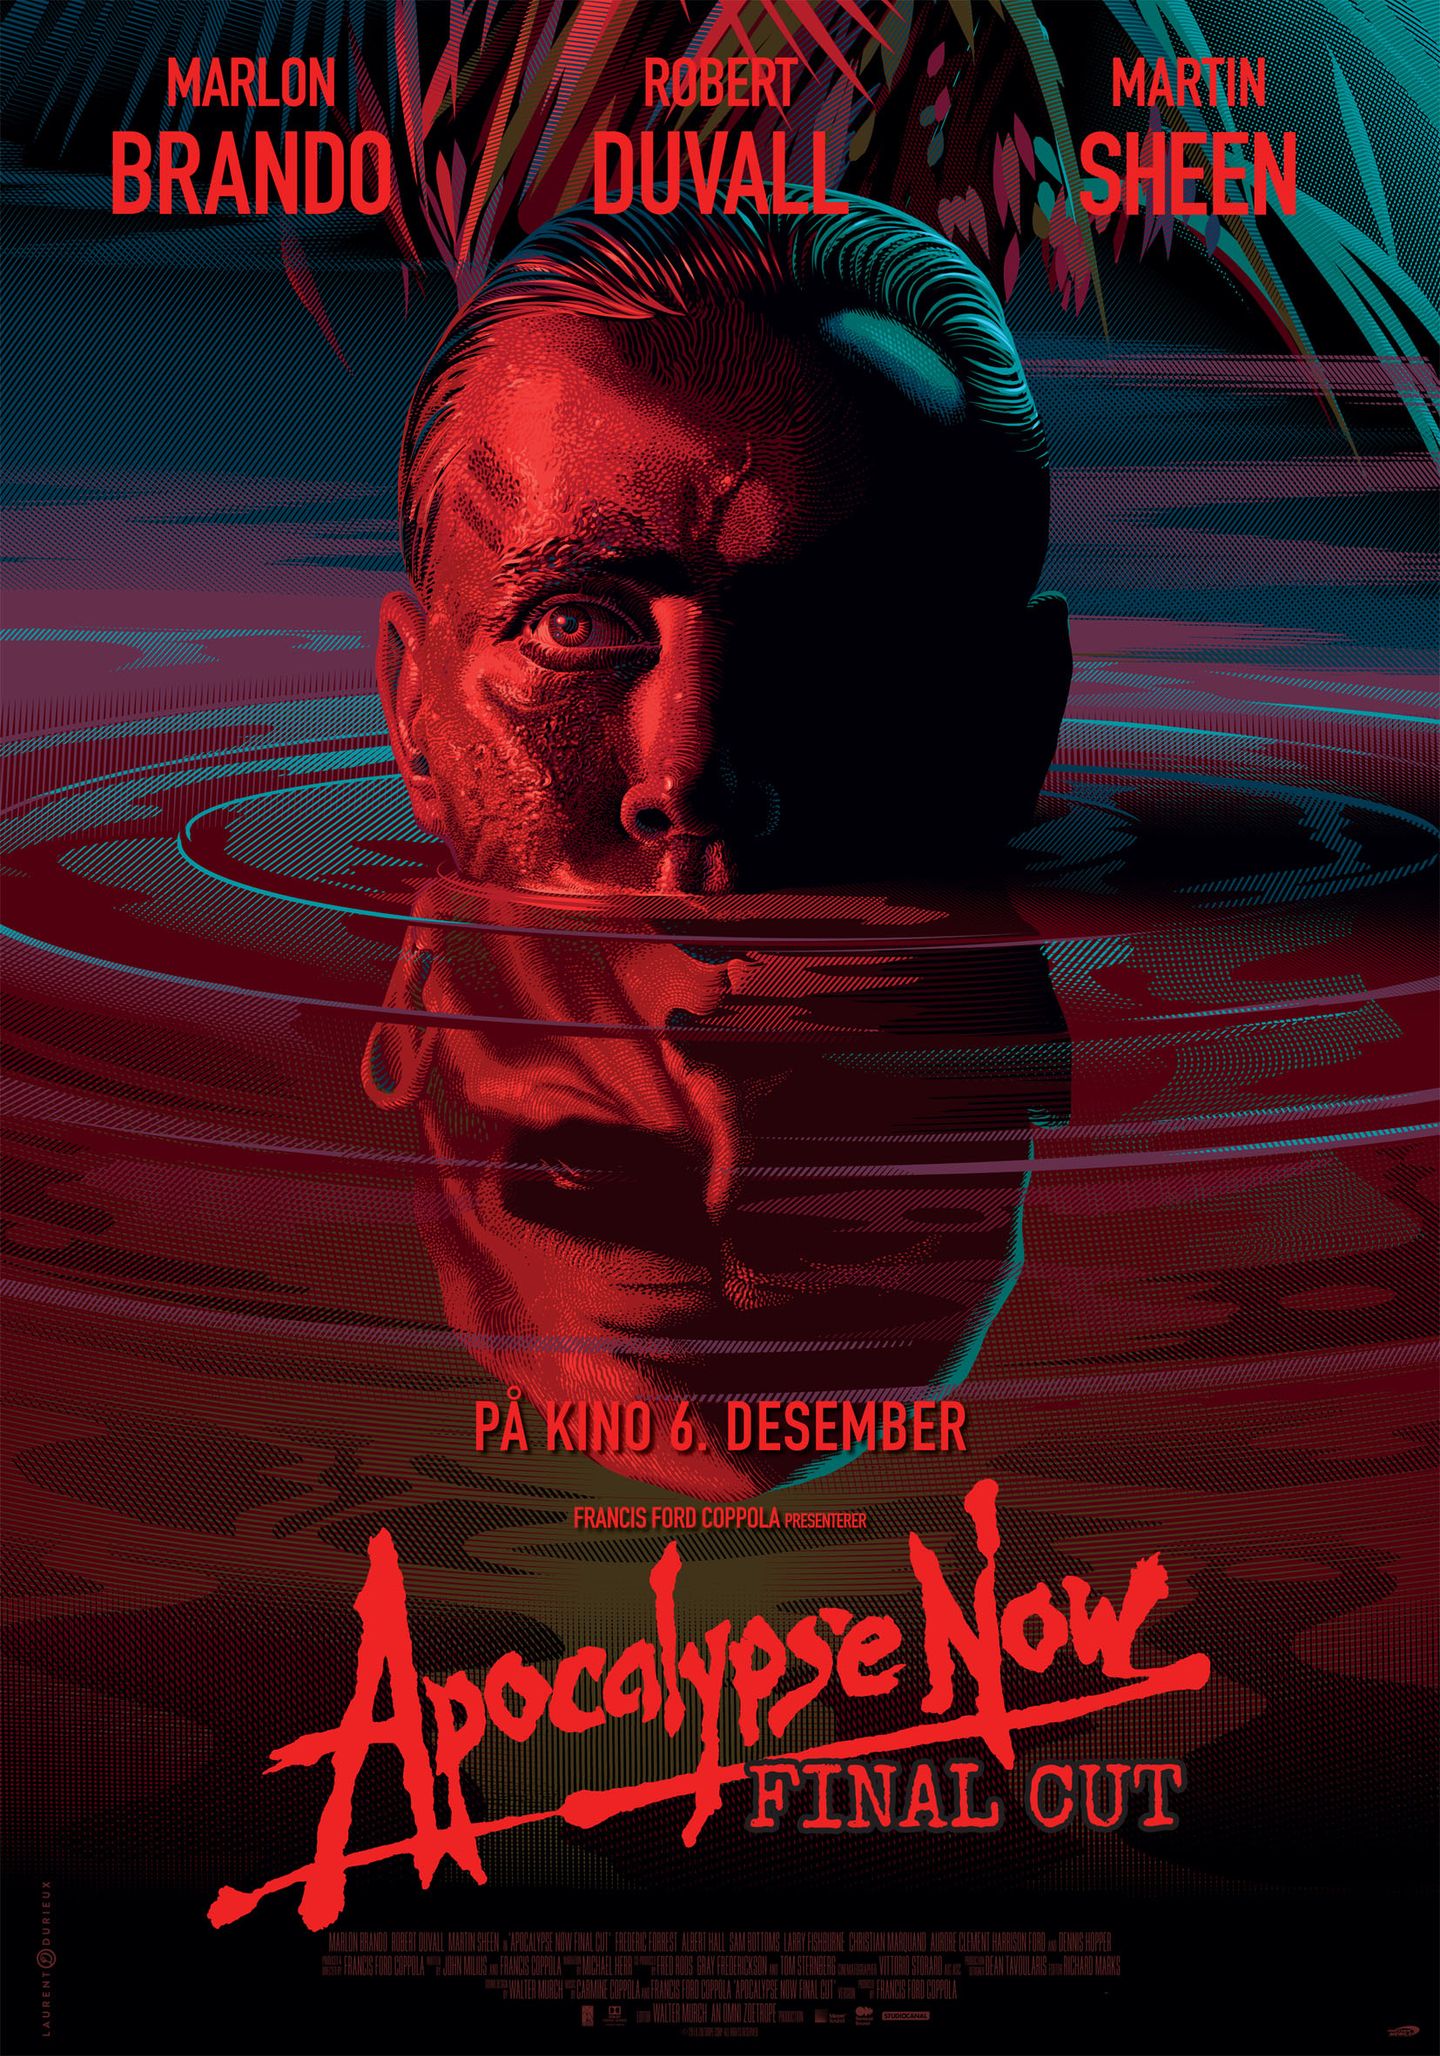 Plakat for 'Apocalypse Now: Final Cut'